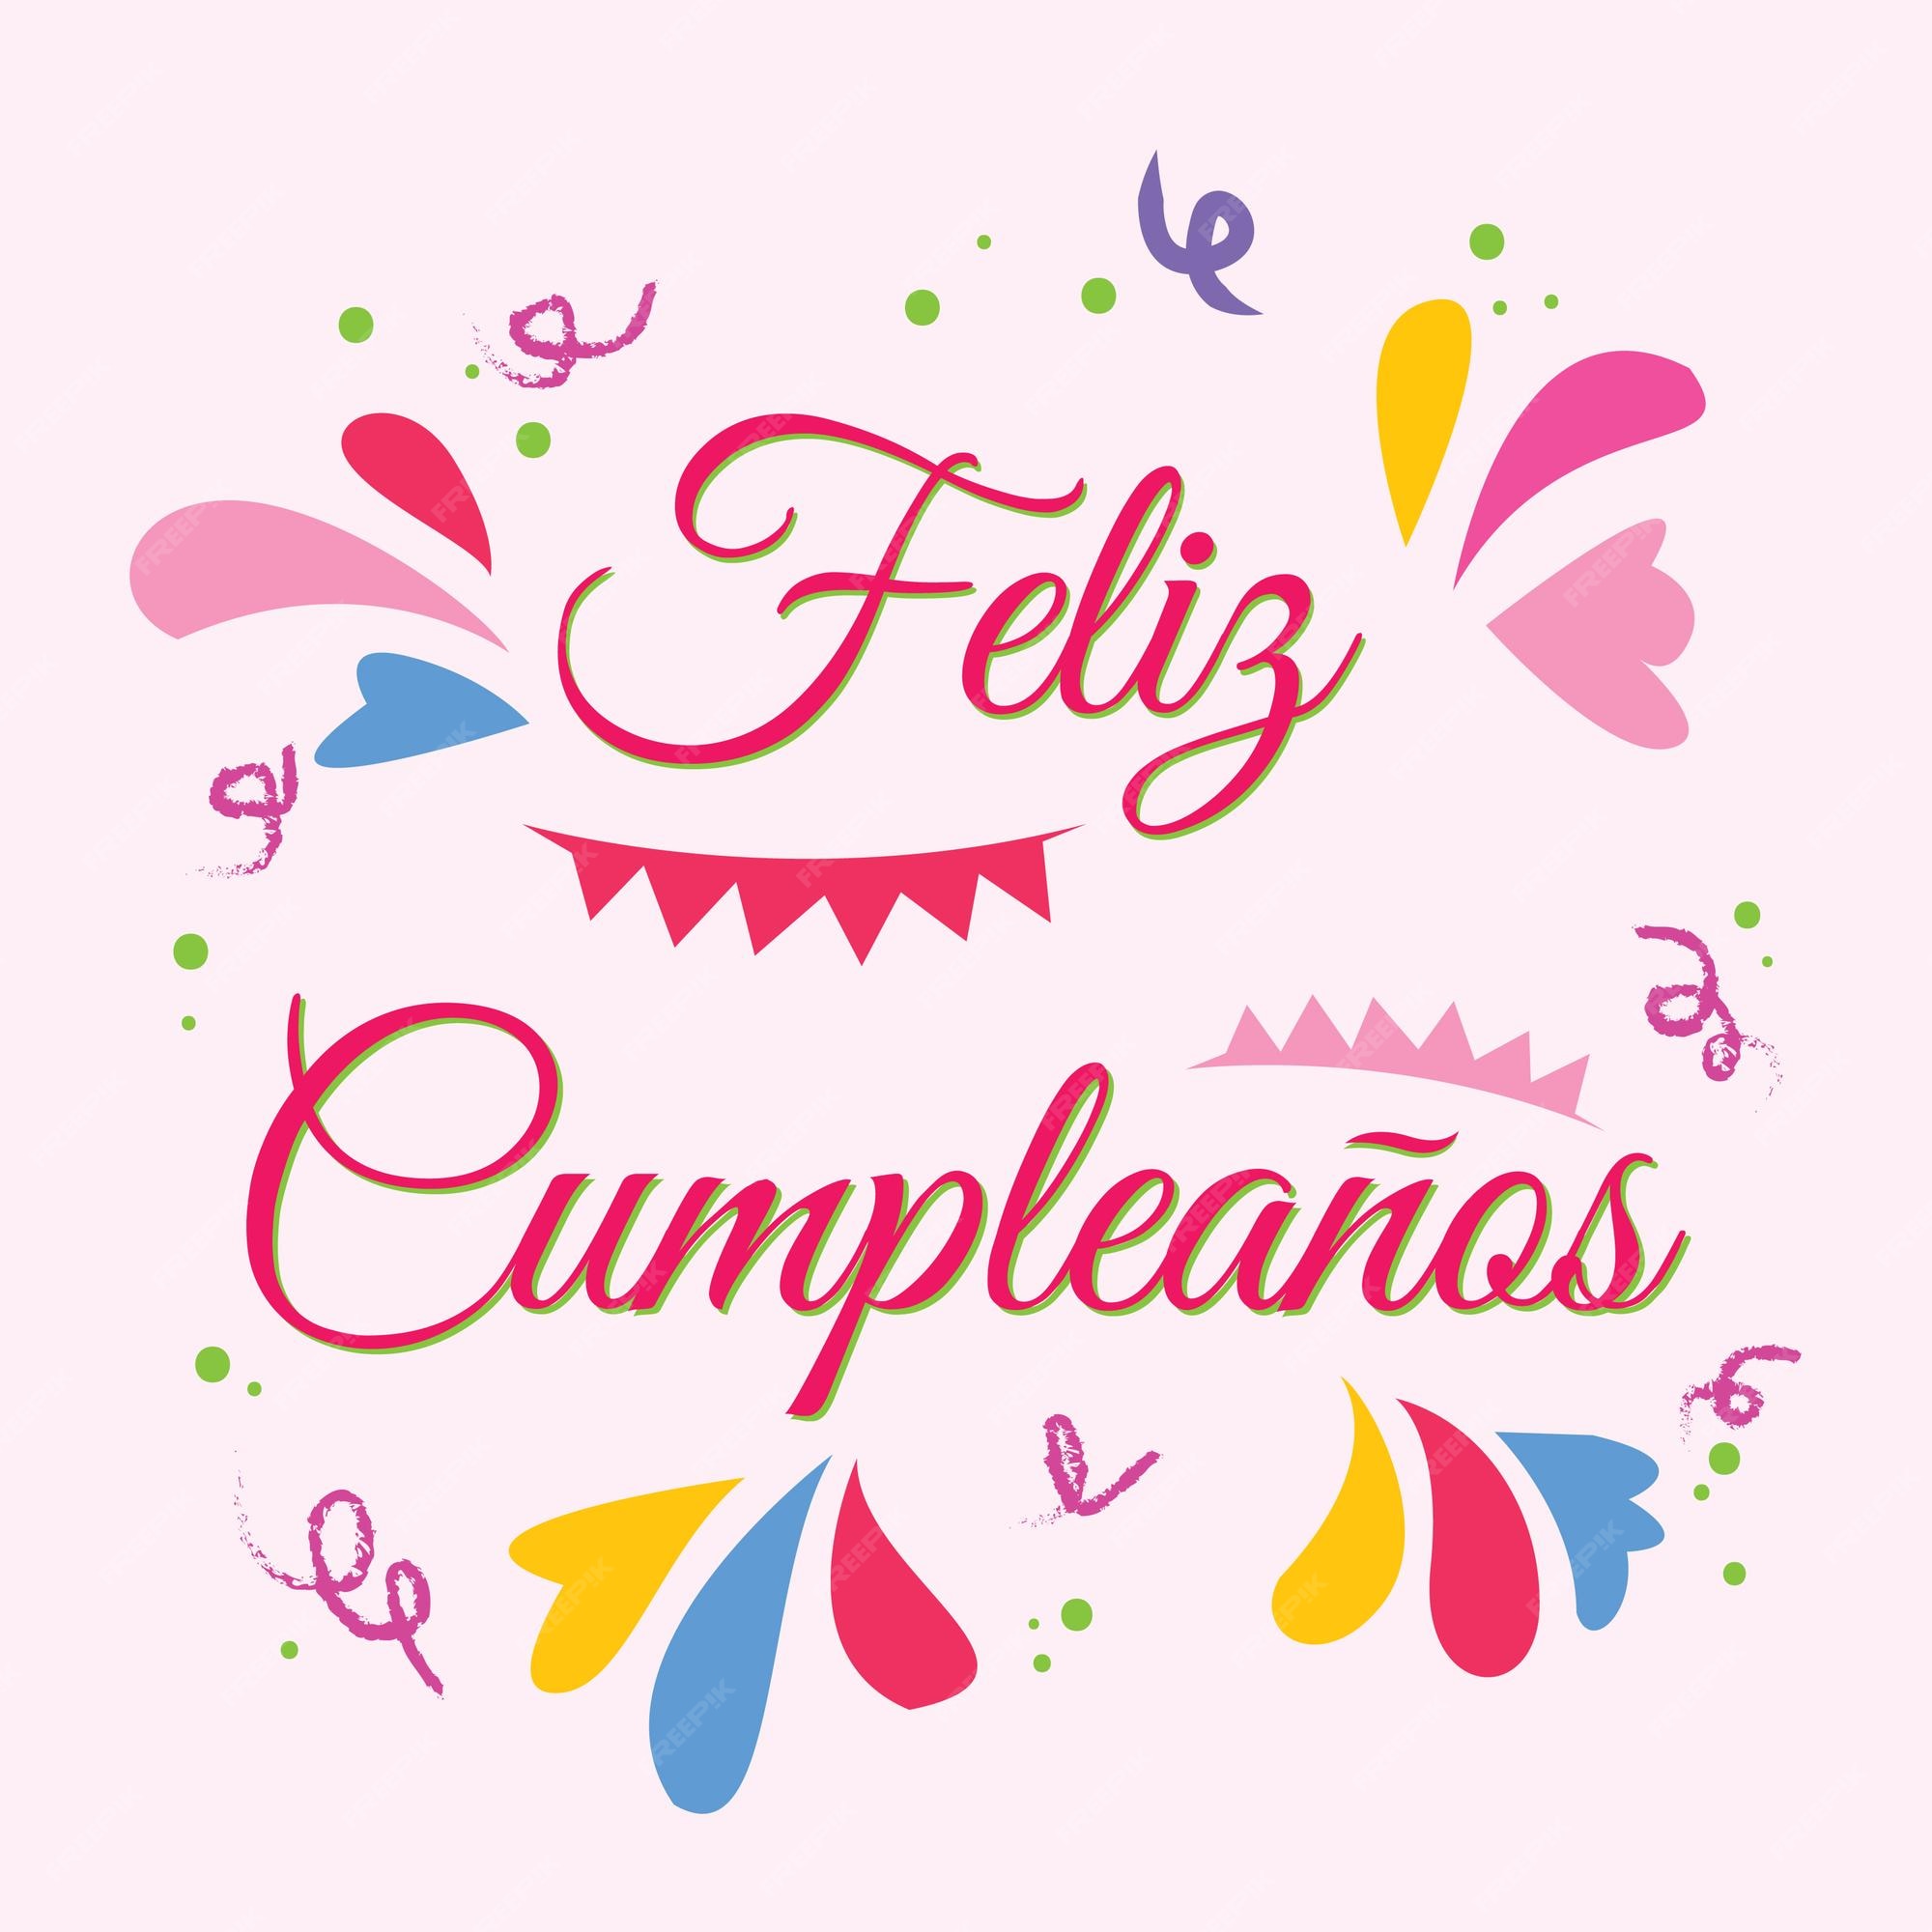 Happy Birthday & Free all images - Spanish - Português - Happy